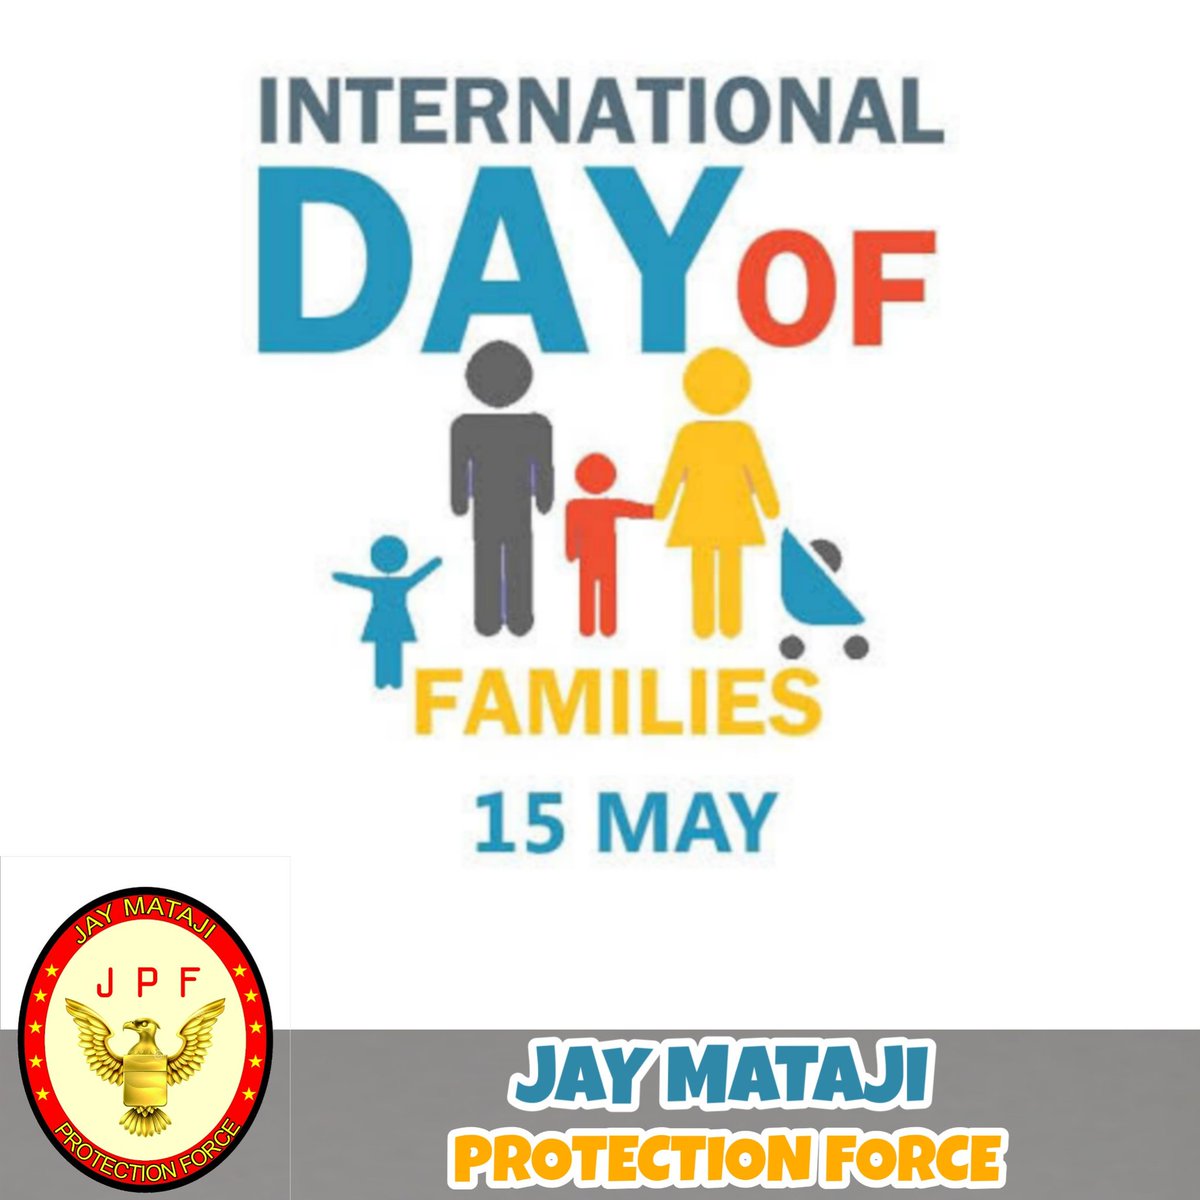 Happy International Family Day !
#happyfamilyday
#BestSecurityServicesinGujarat #MallSecurity #ResidenceSecurity #SocietySecurityServices #EventSecurityServices #PersonalSecurityServices #Bodyguards #Protection #PublicSecurity #CelebritySecurityServices #JayMatajiProtectionForce